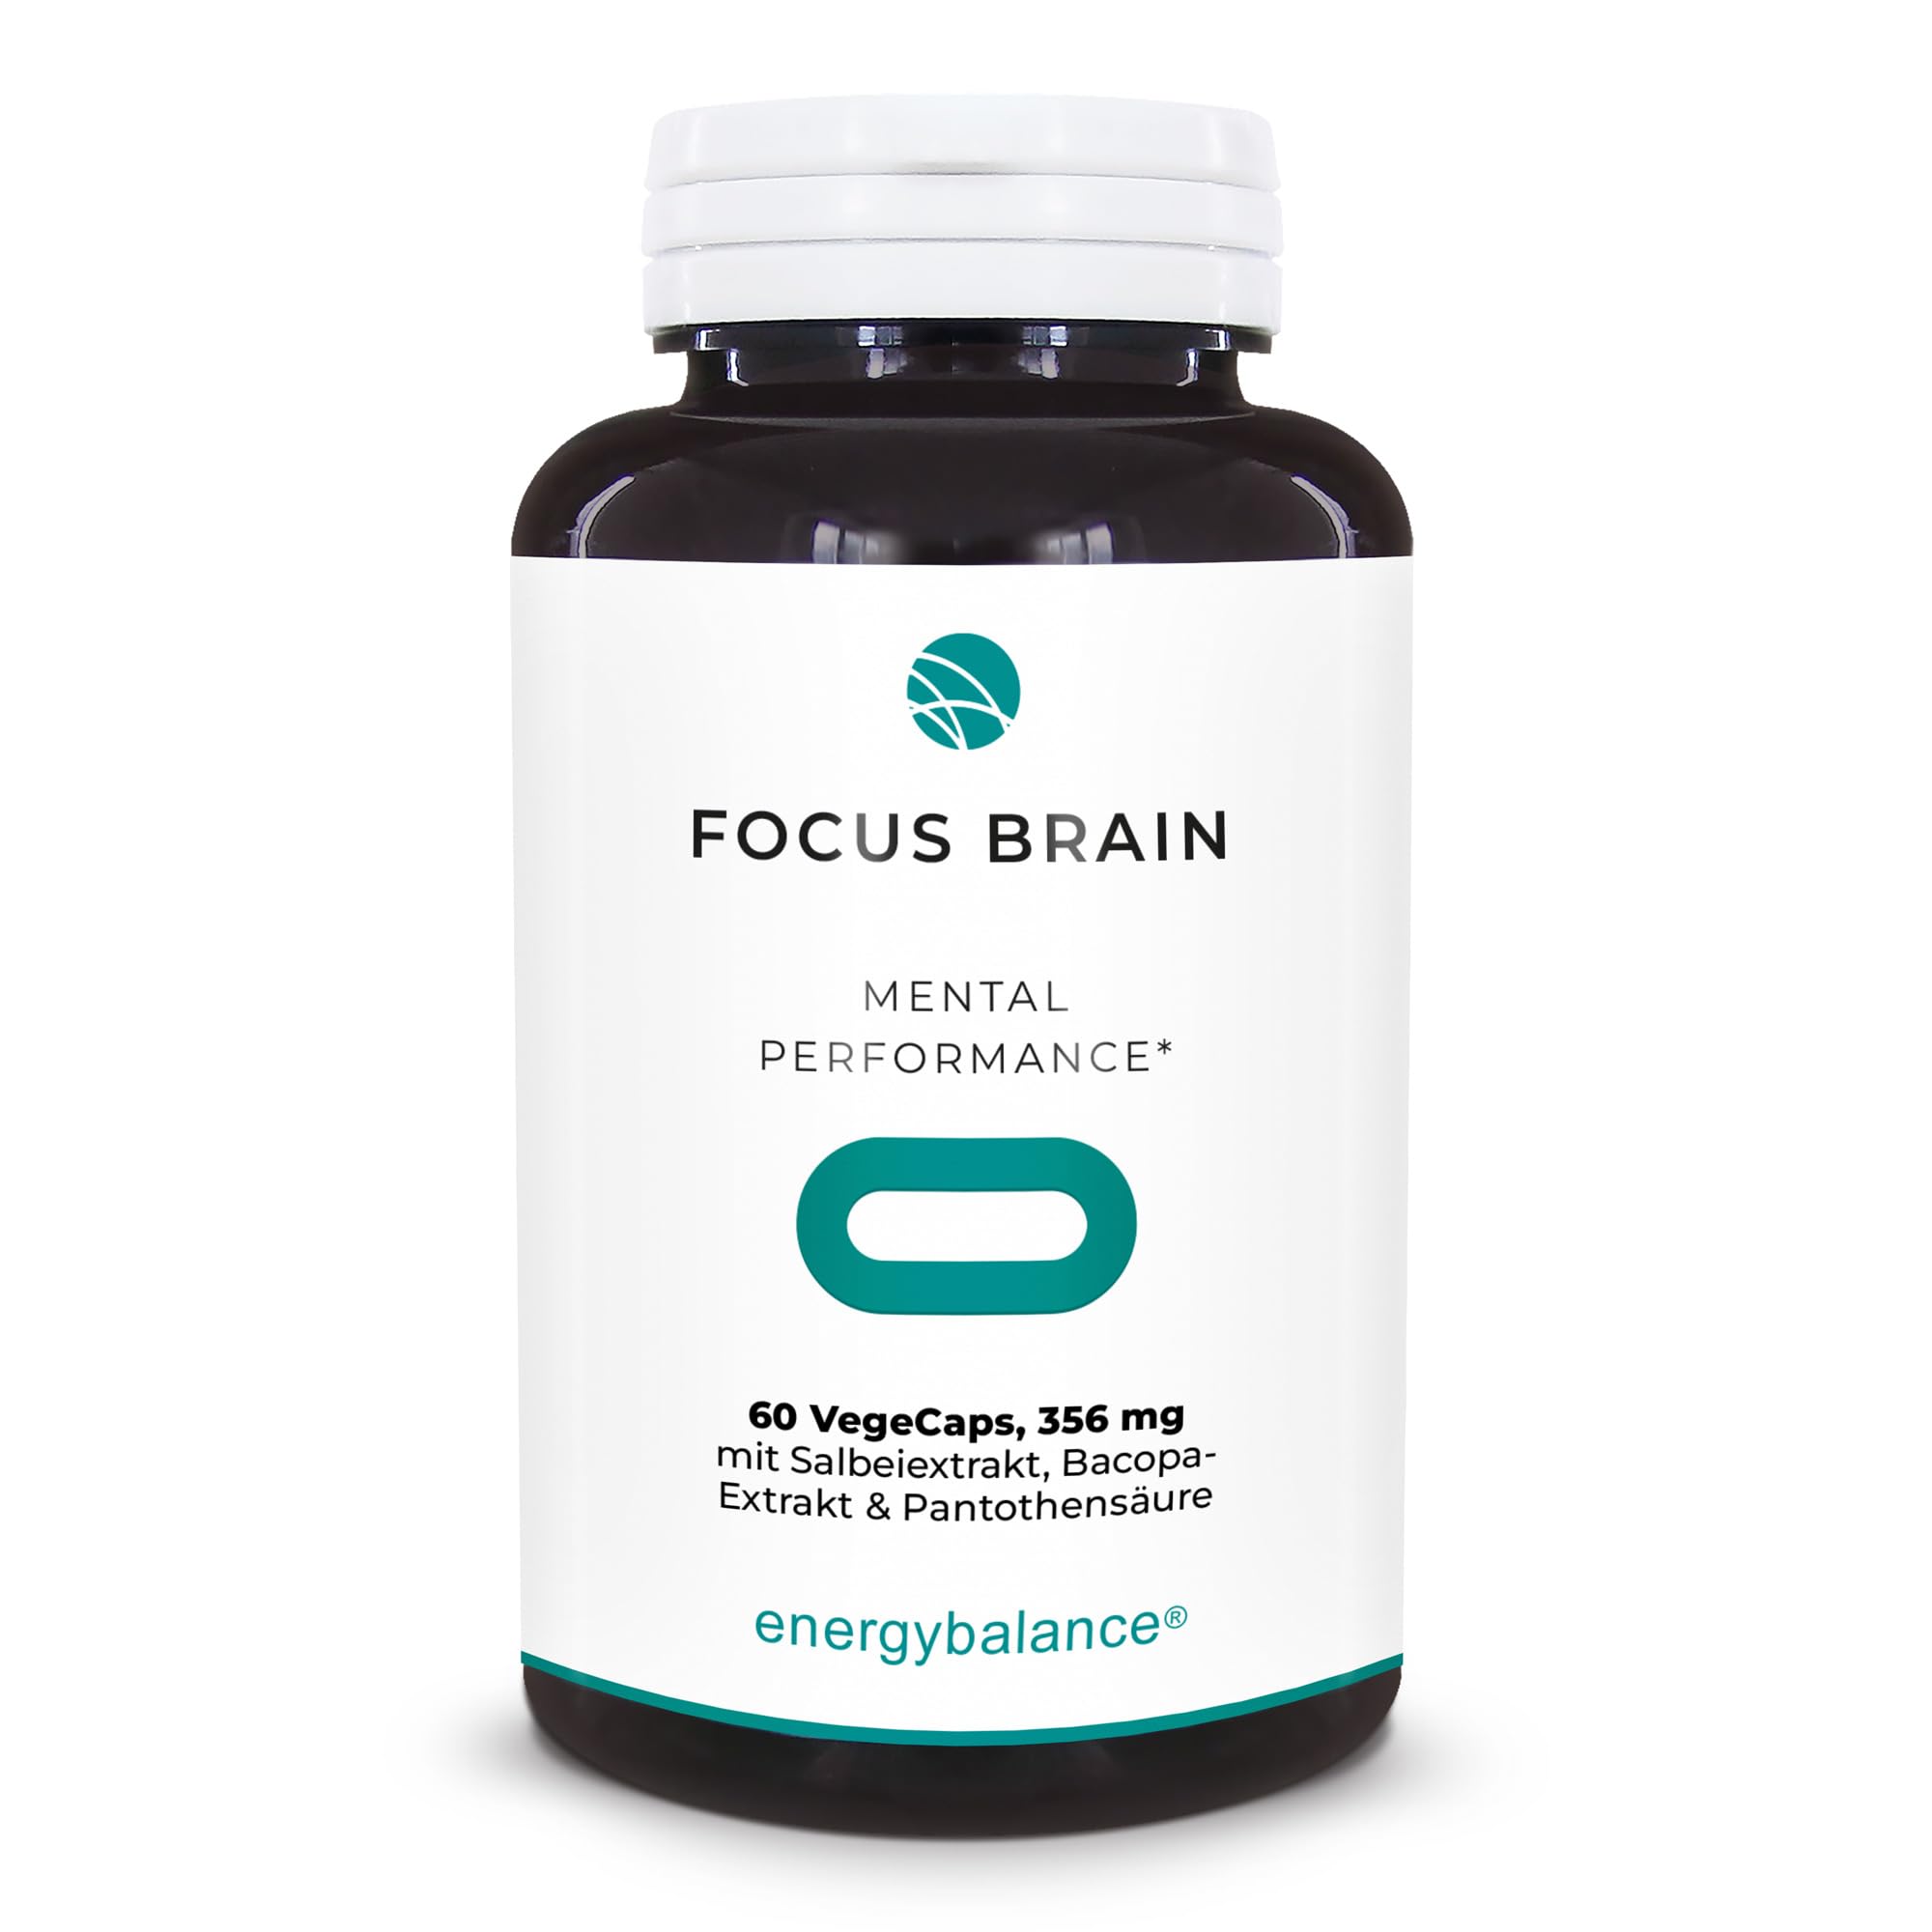 Focus Brain mit Salbei- und Bacoba-Extrakt & Pantothensäure, 60 VegeCaps